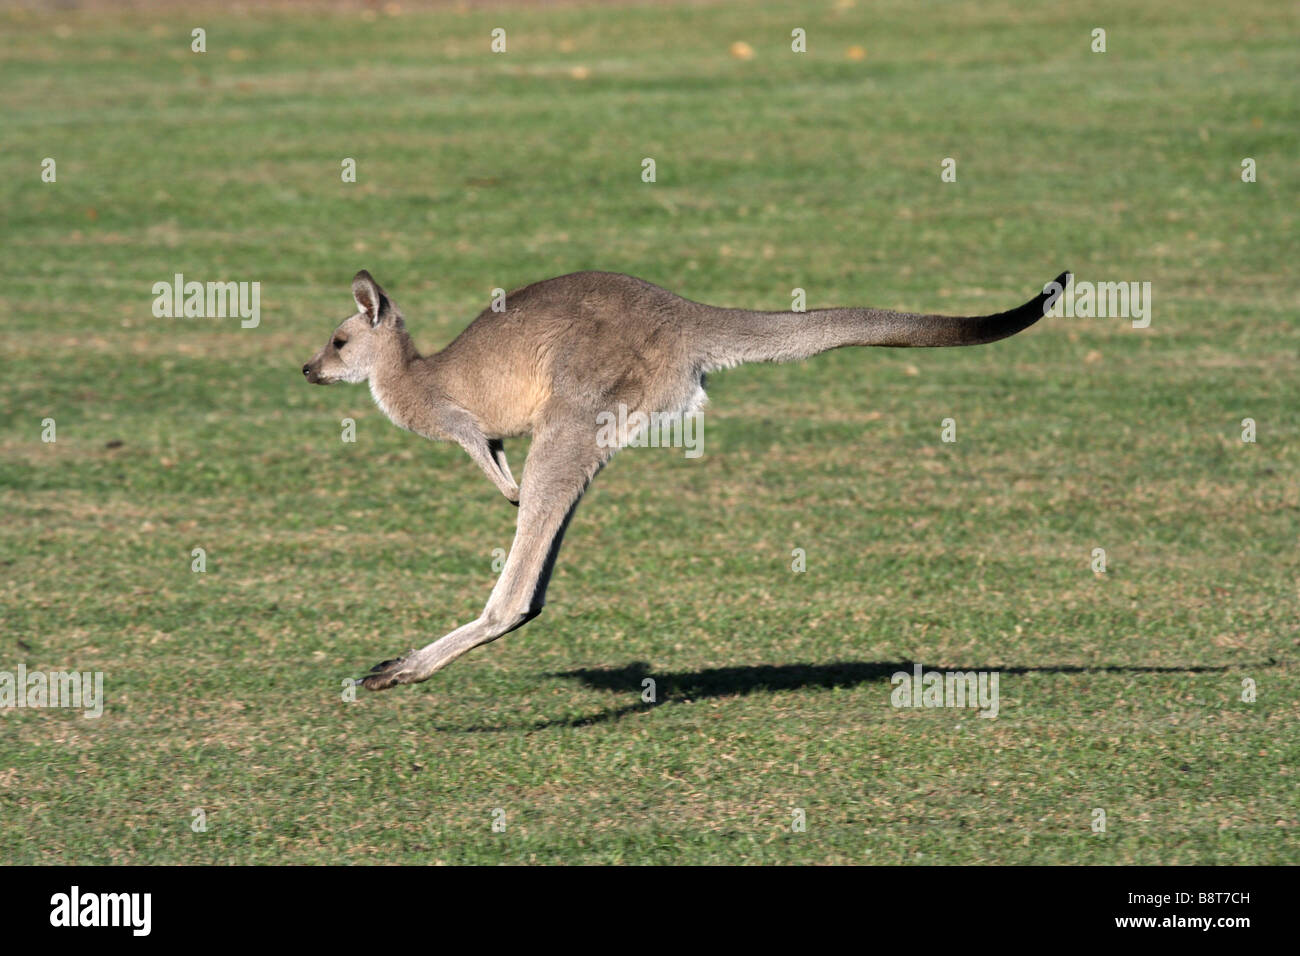 Eastern grey kangaroo hopping Stock Photo